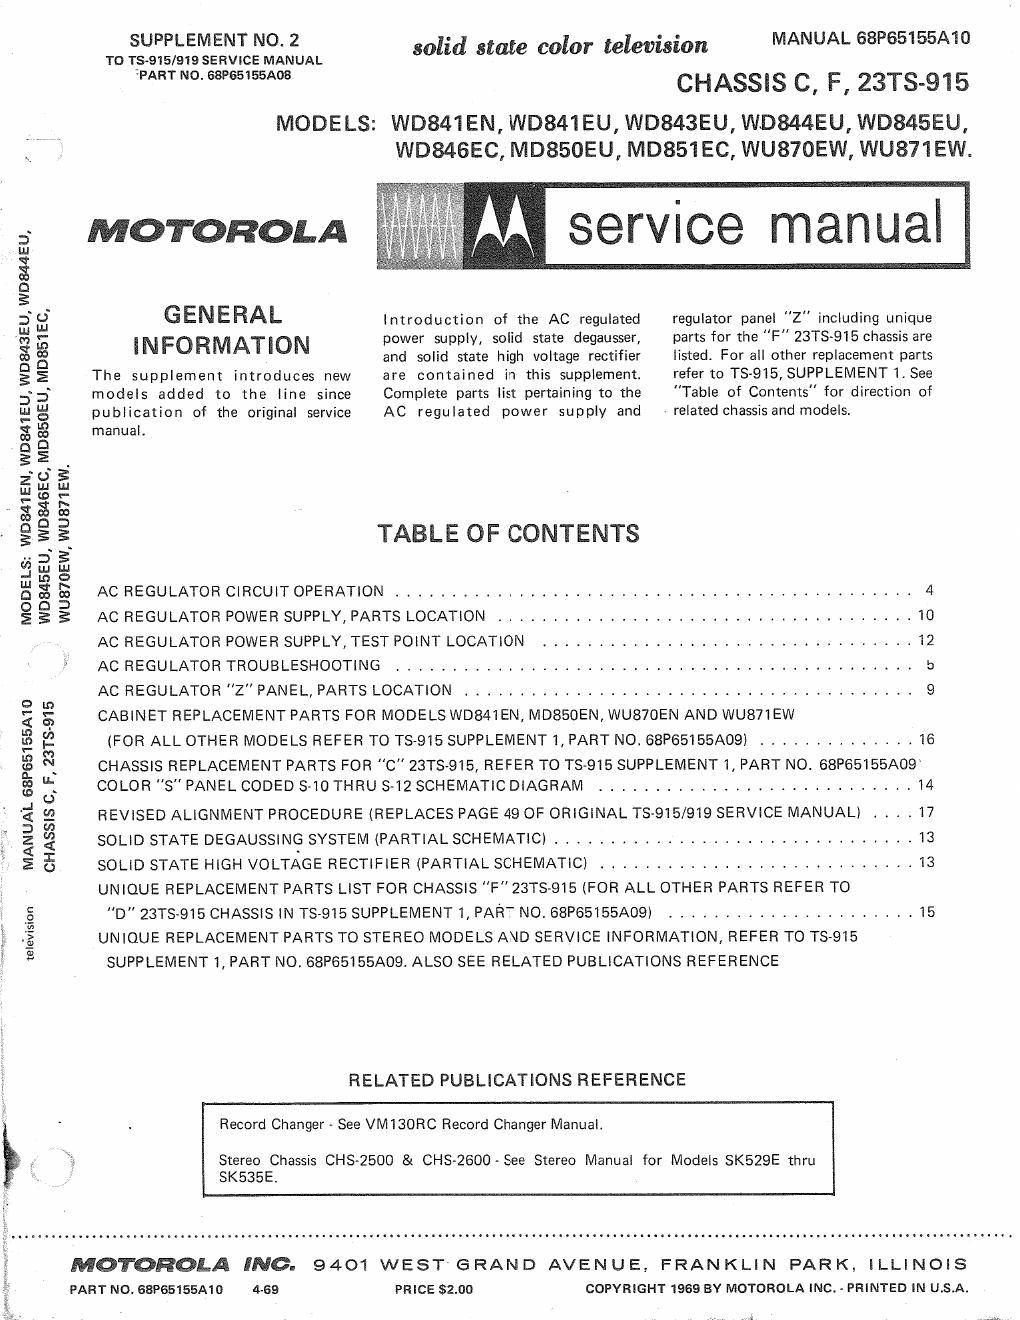 motorola wd 845 eu service manual